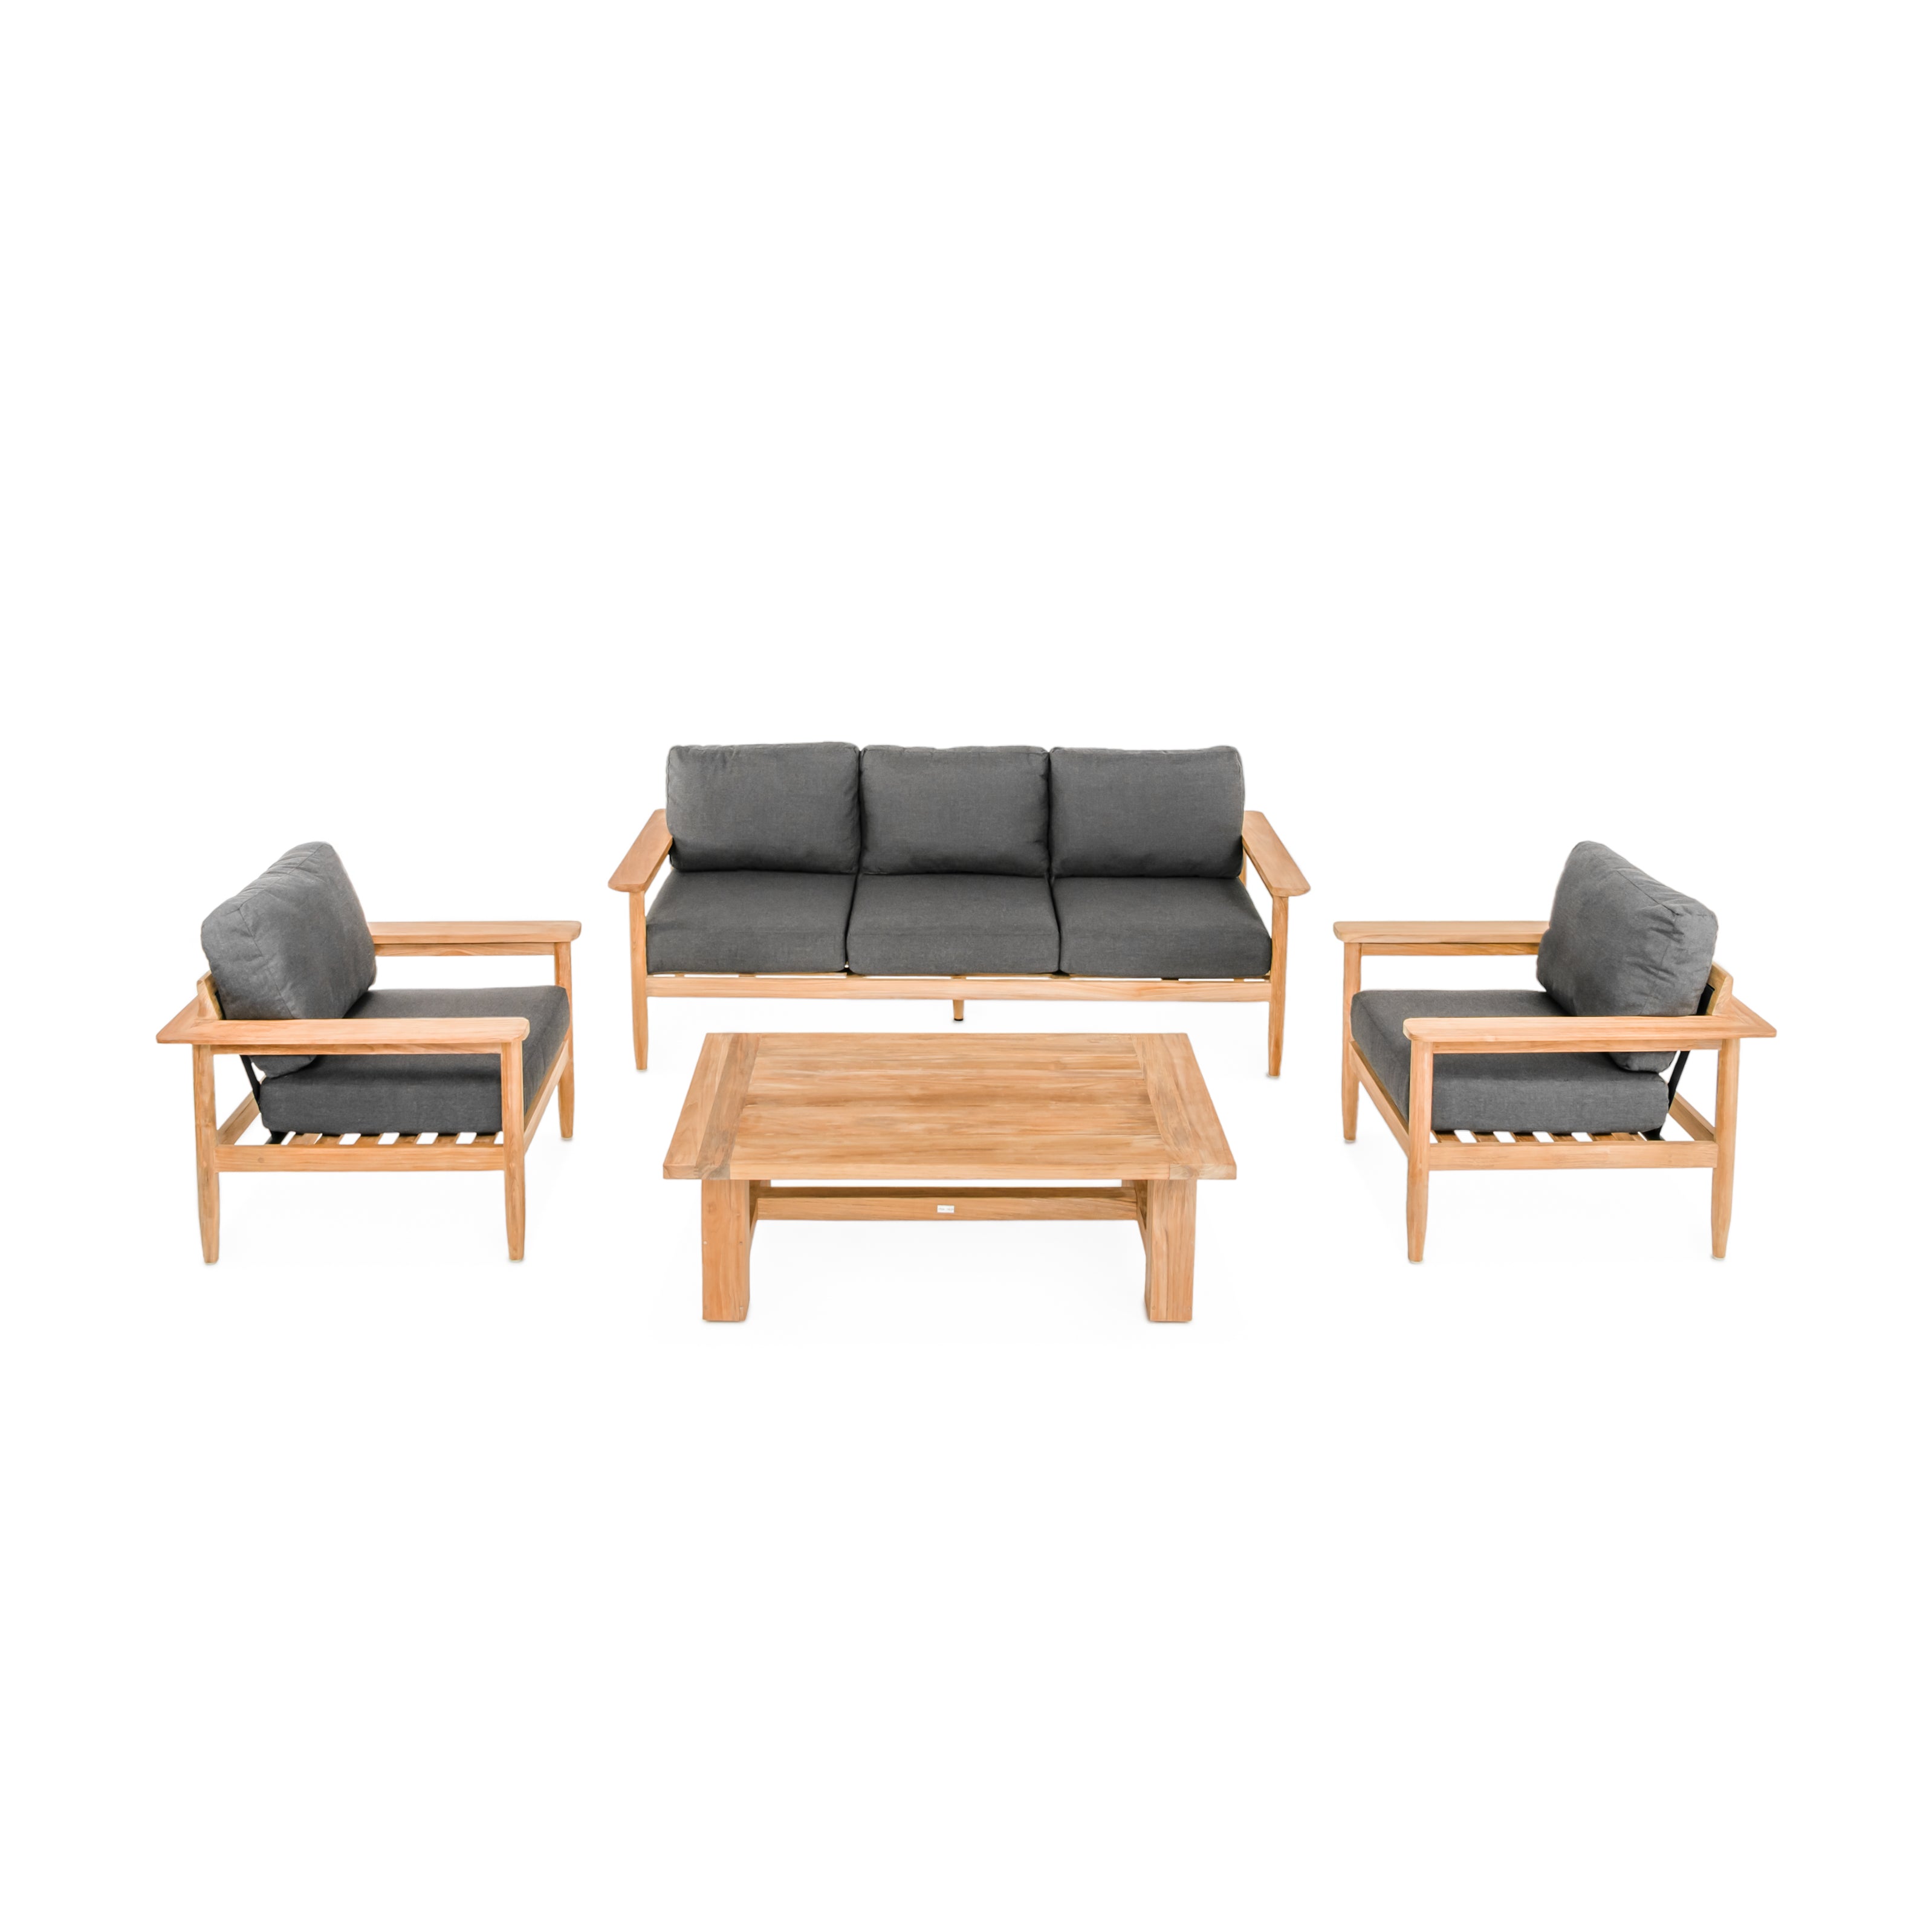 4 Piece Furniture Set - Outdoor Furniture Set Ibiza Collection – Teak + Table Outdoor